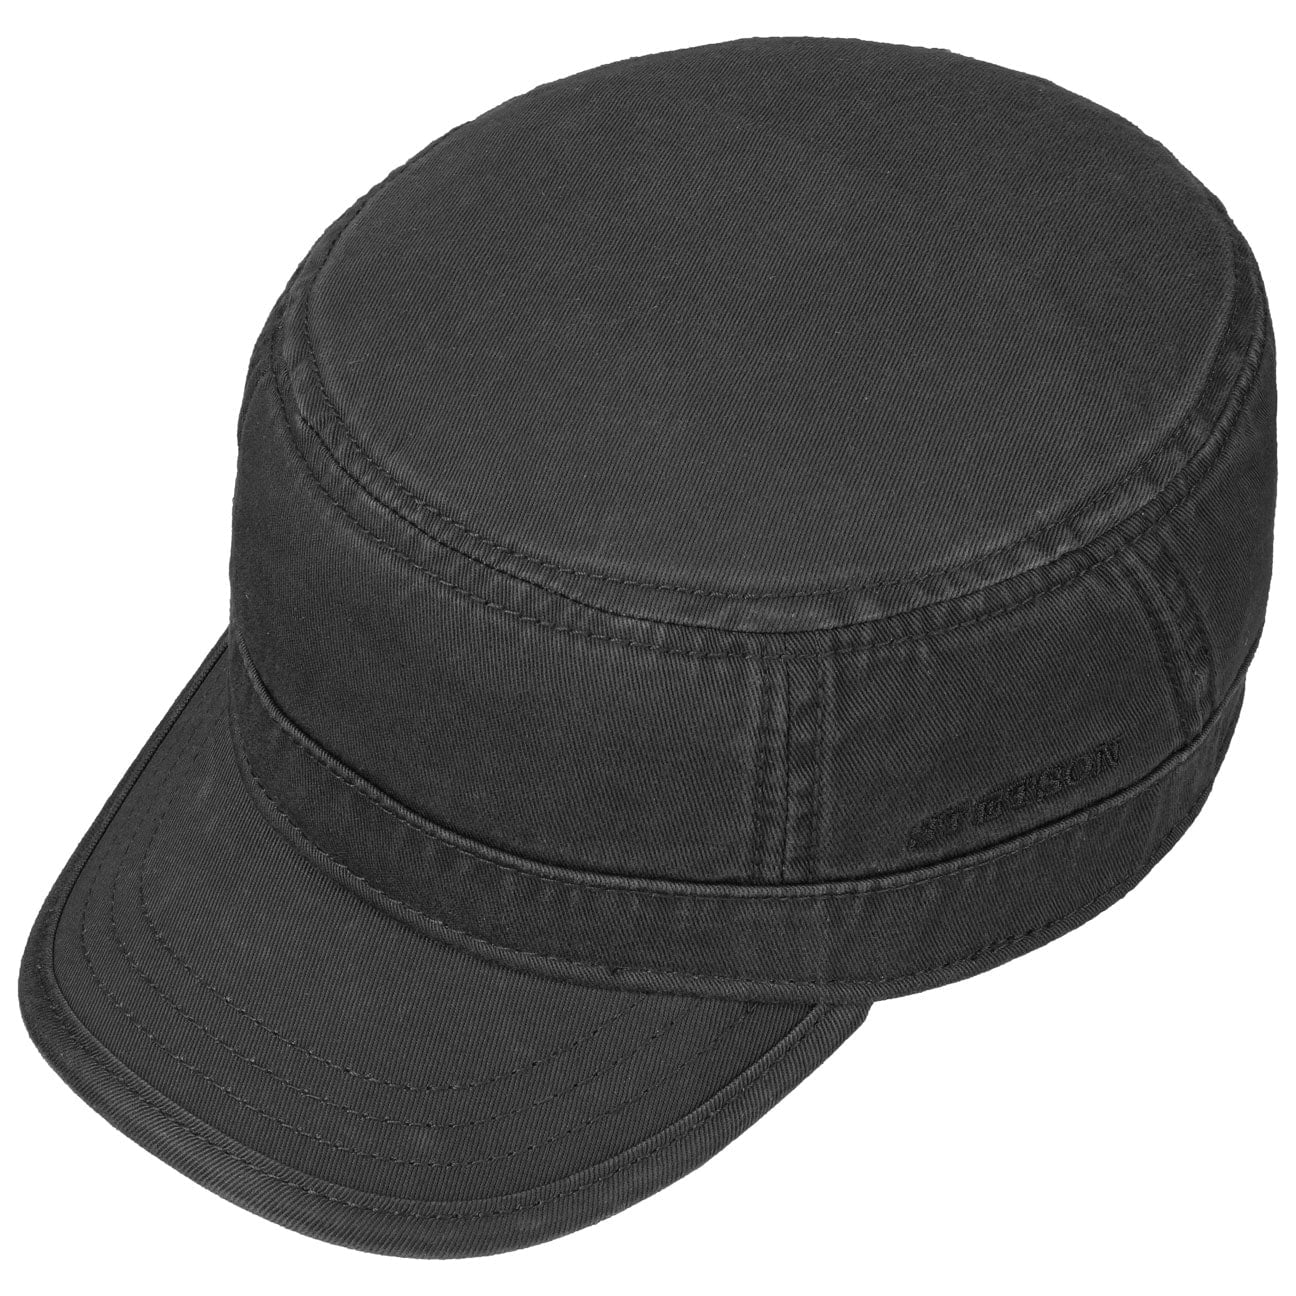 Stetson - Army Cap Cotton - Black - Headz Up 